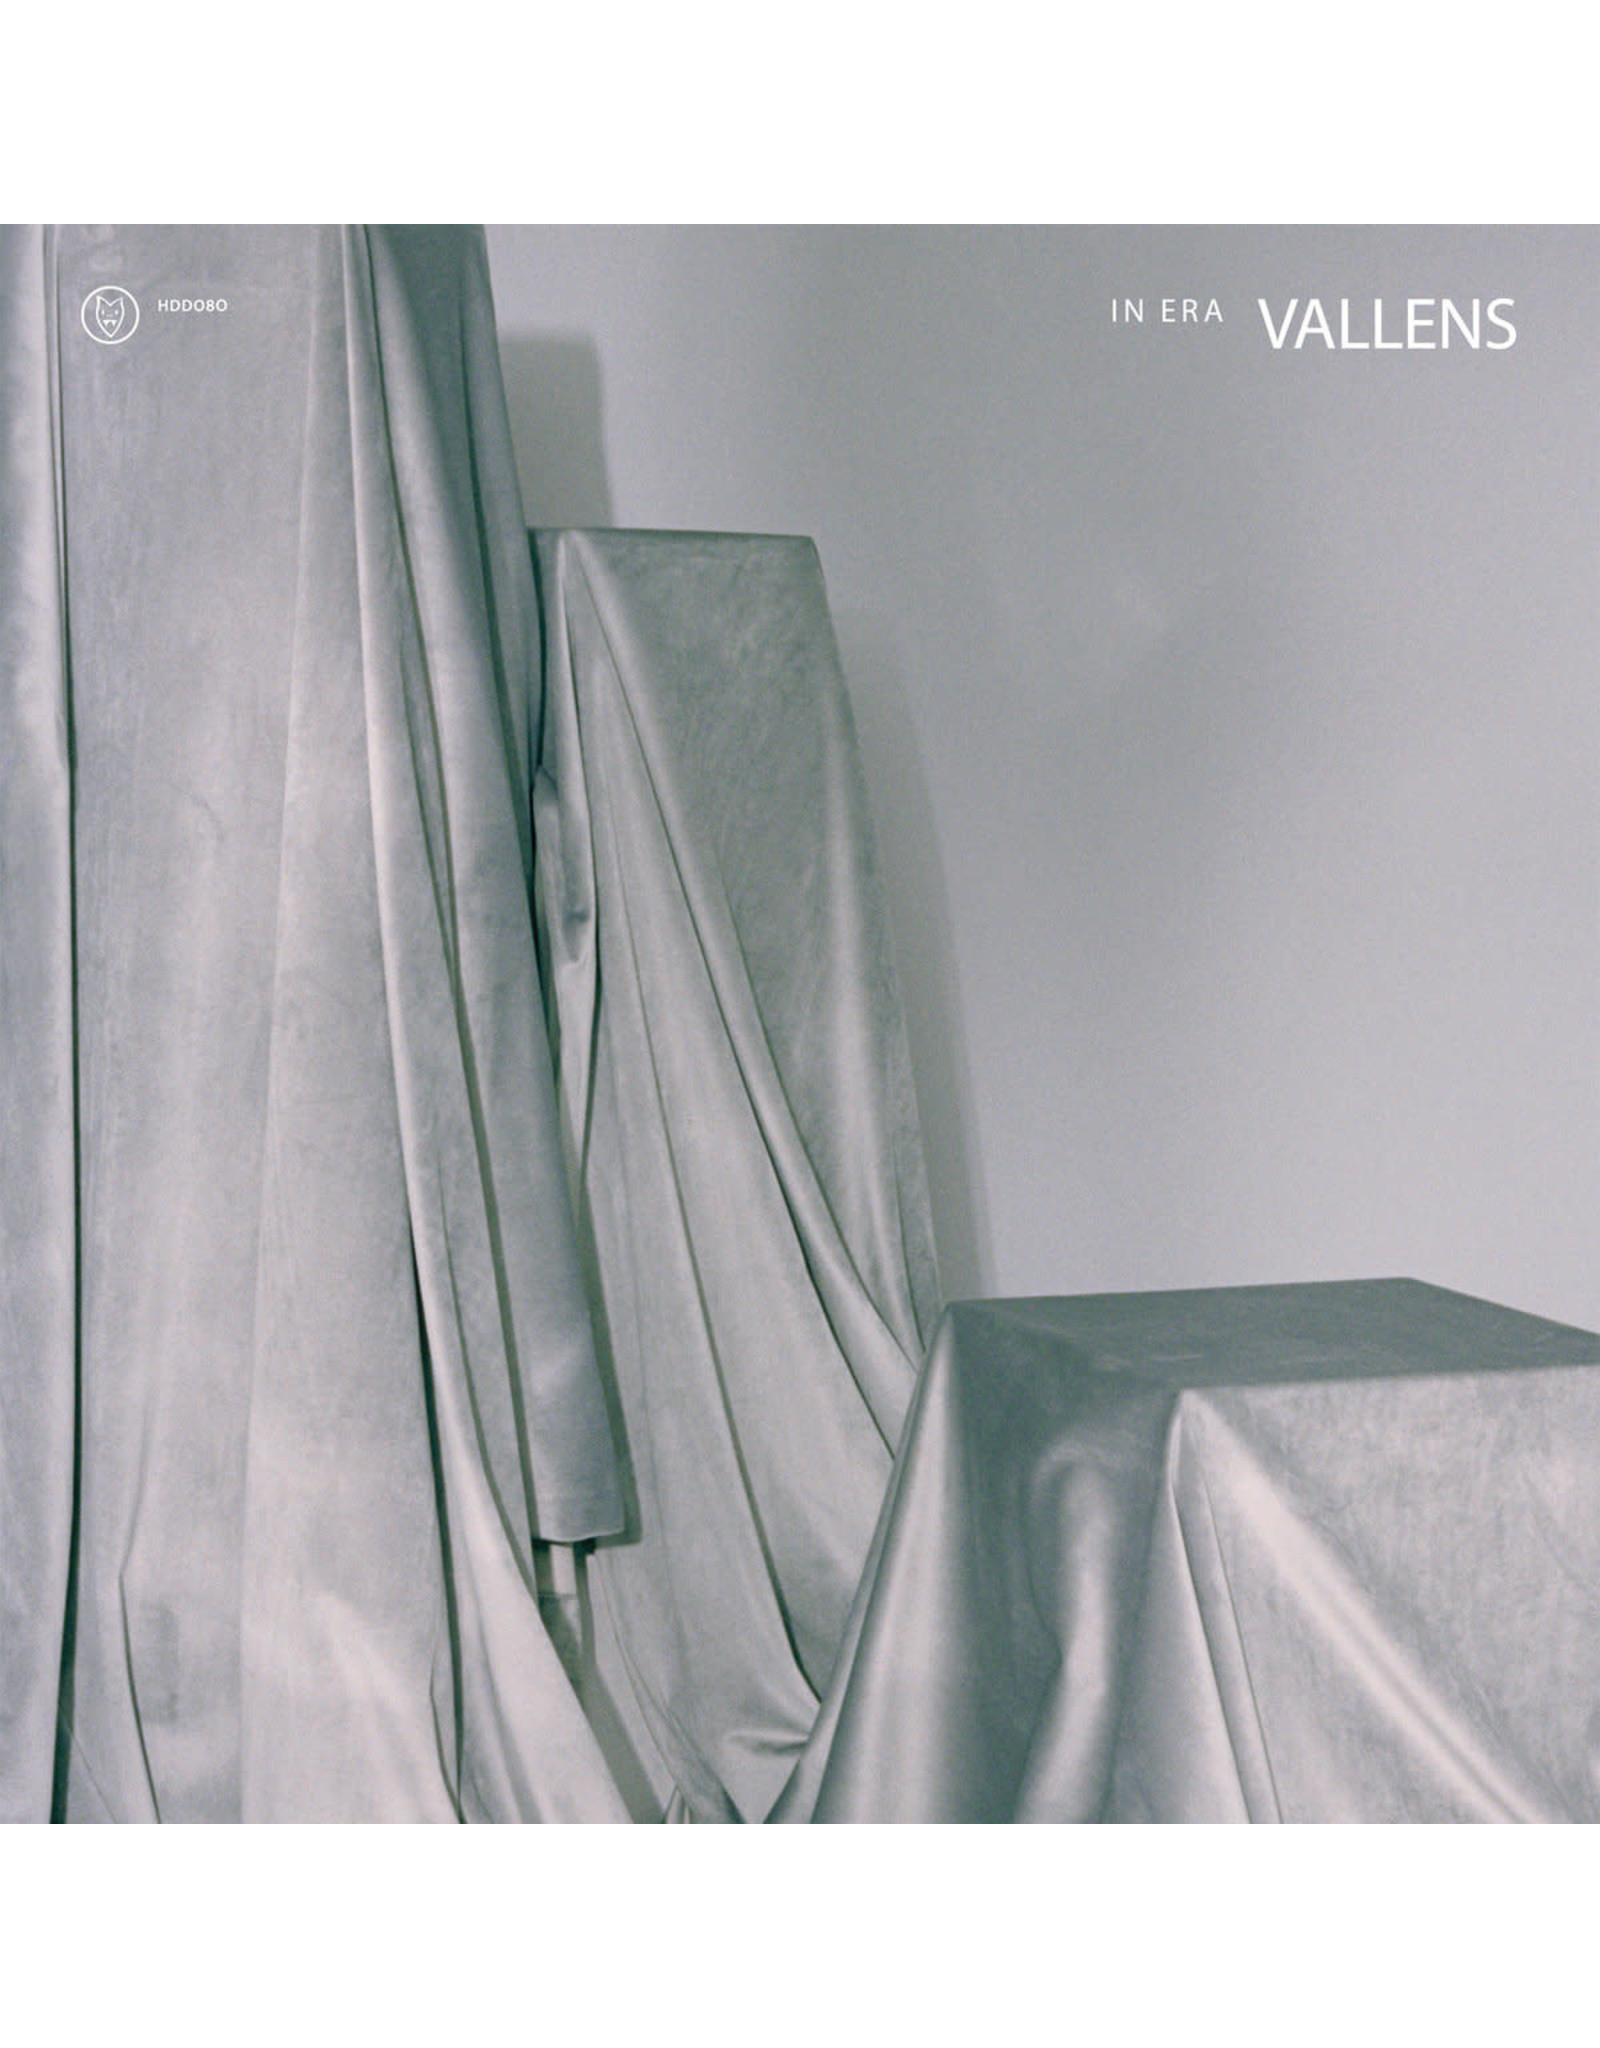 Vallens - In Era LP (Silver Vinyl)